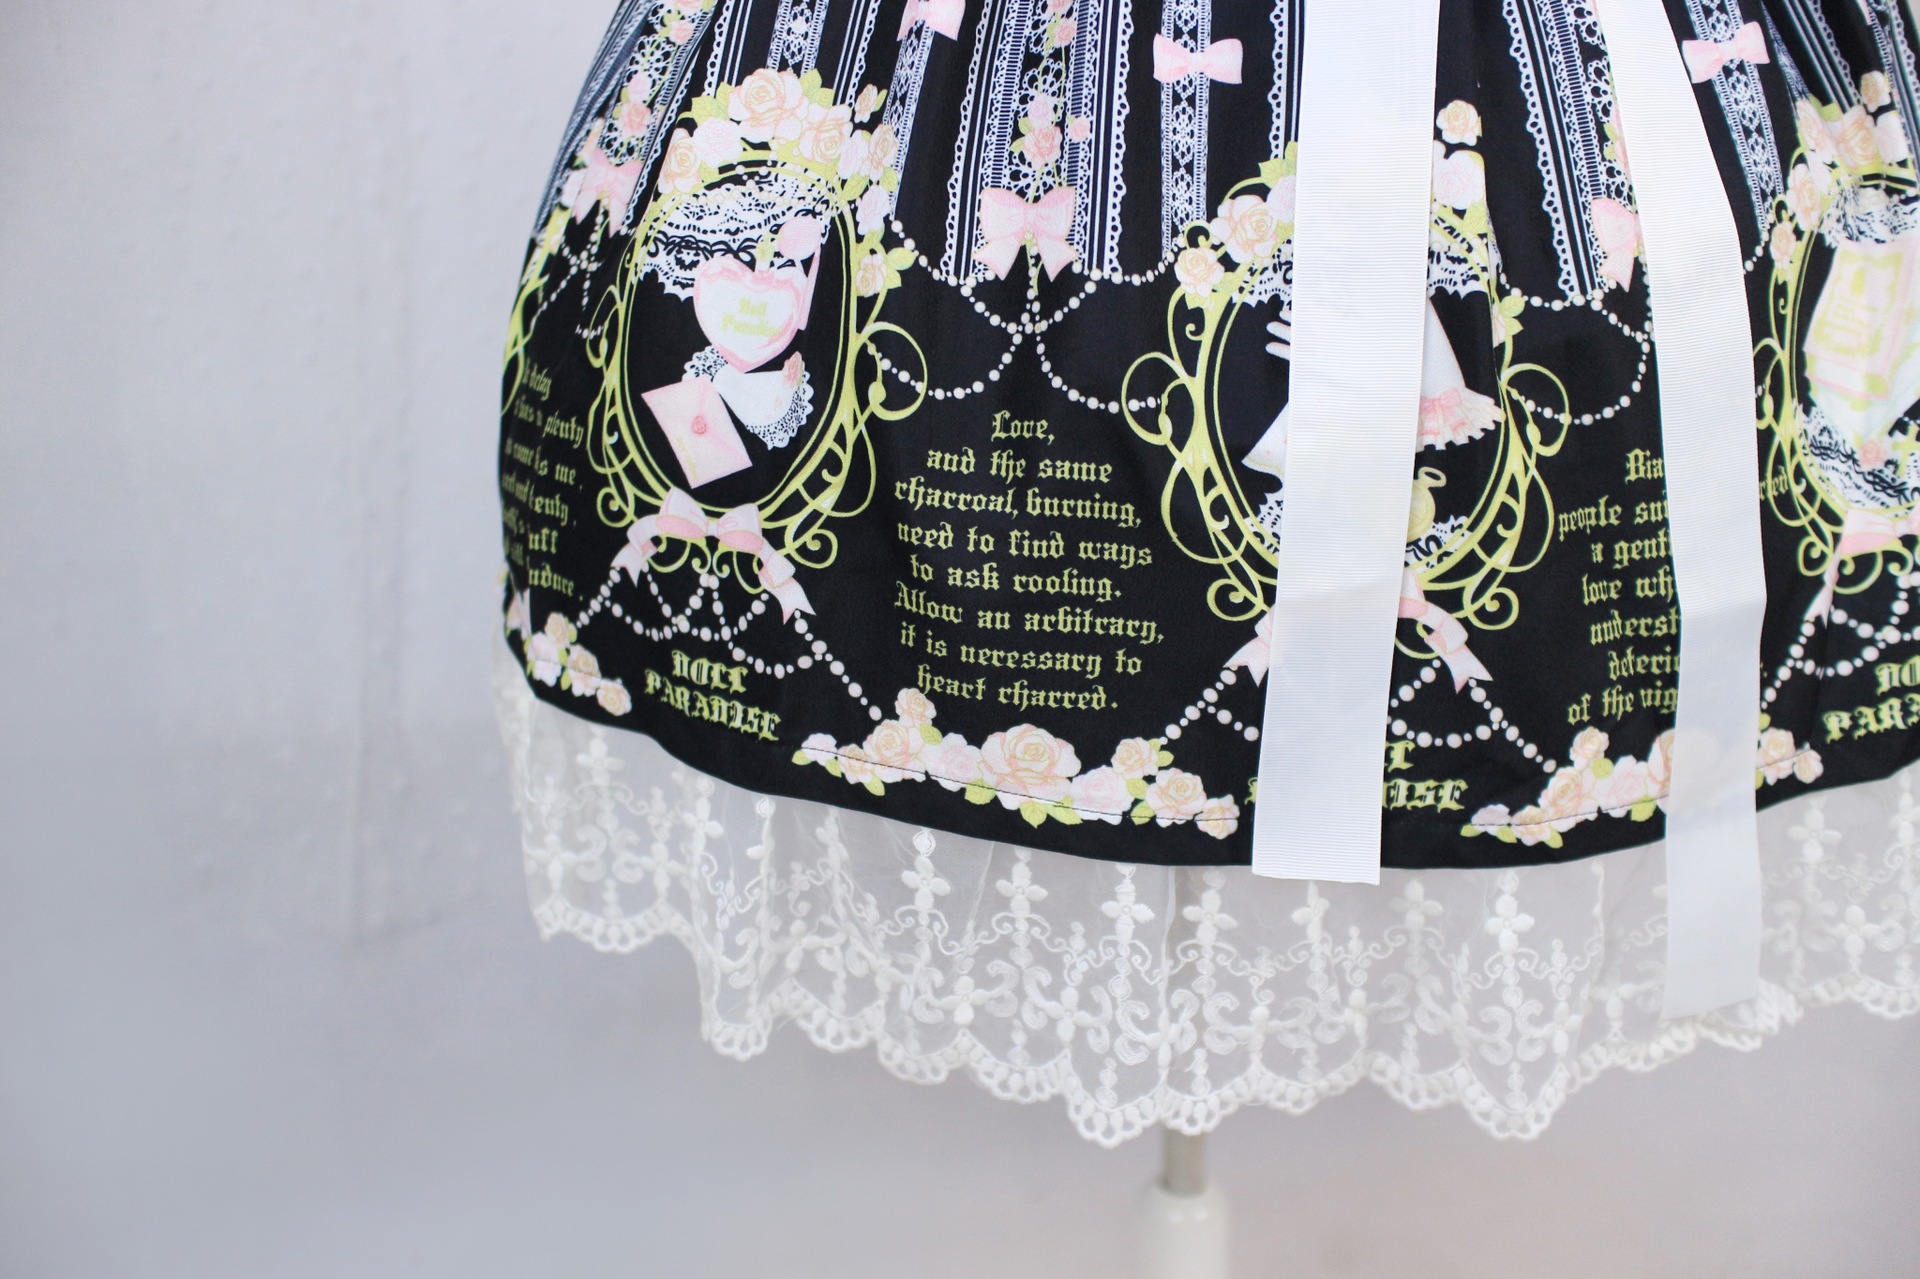 Strap Lolita Dress With Bow